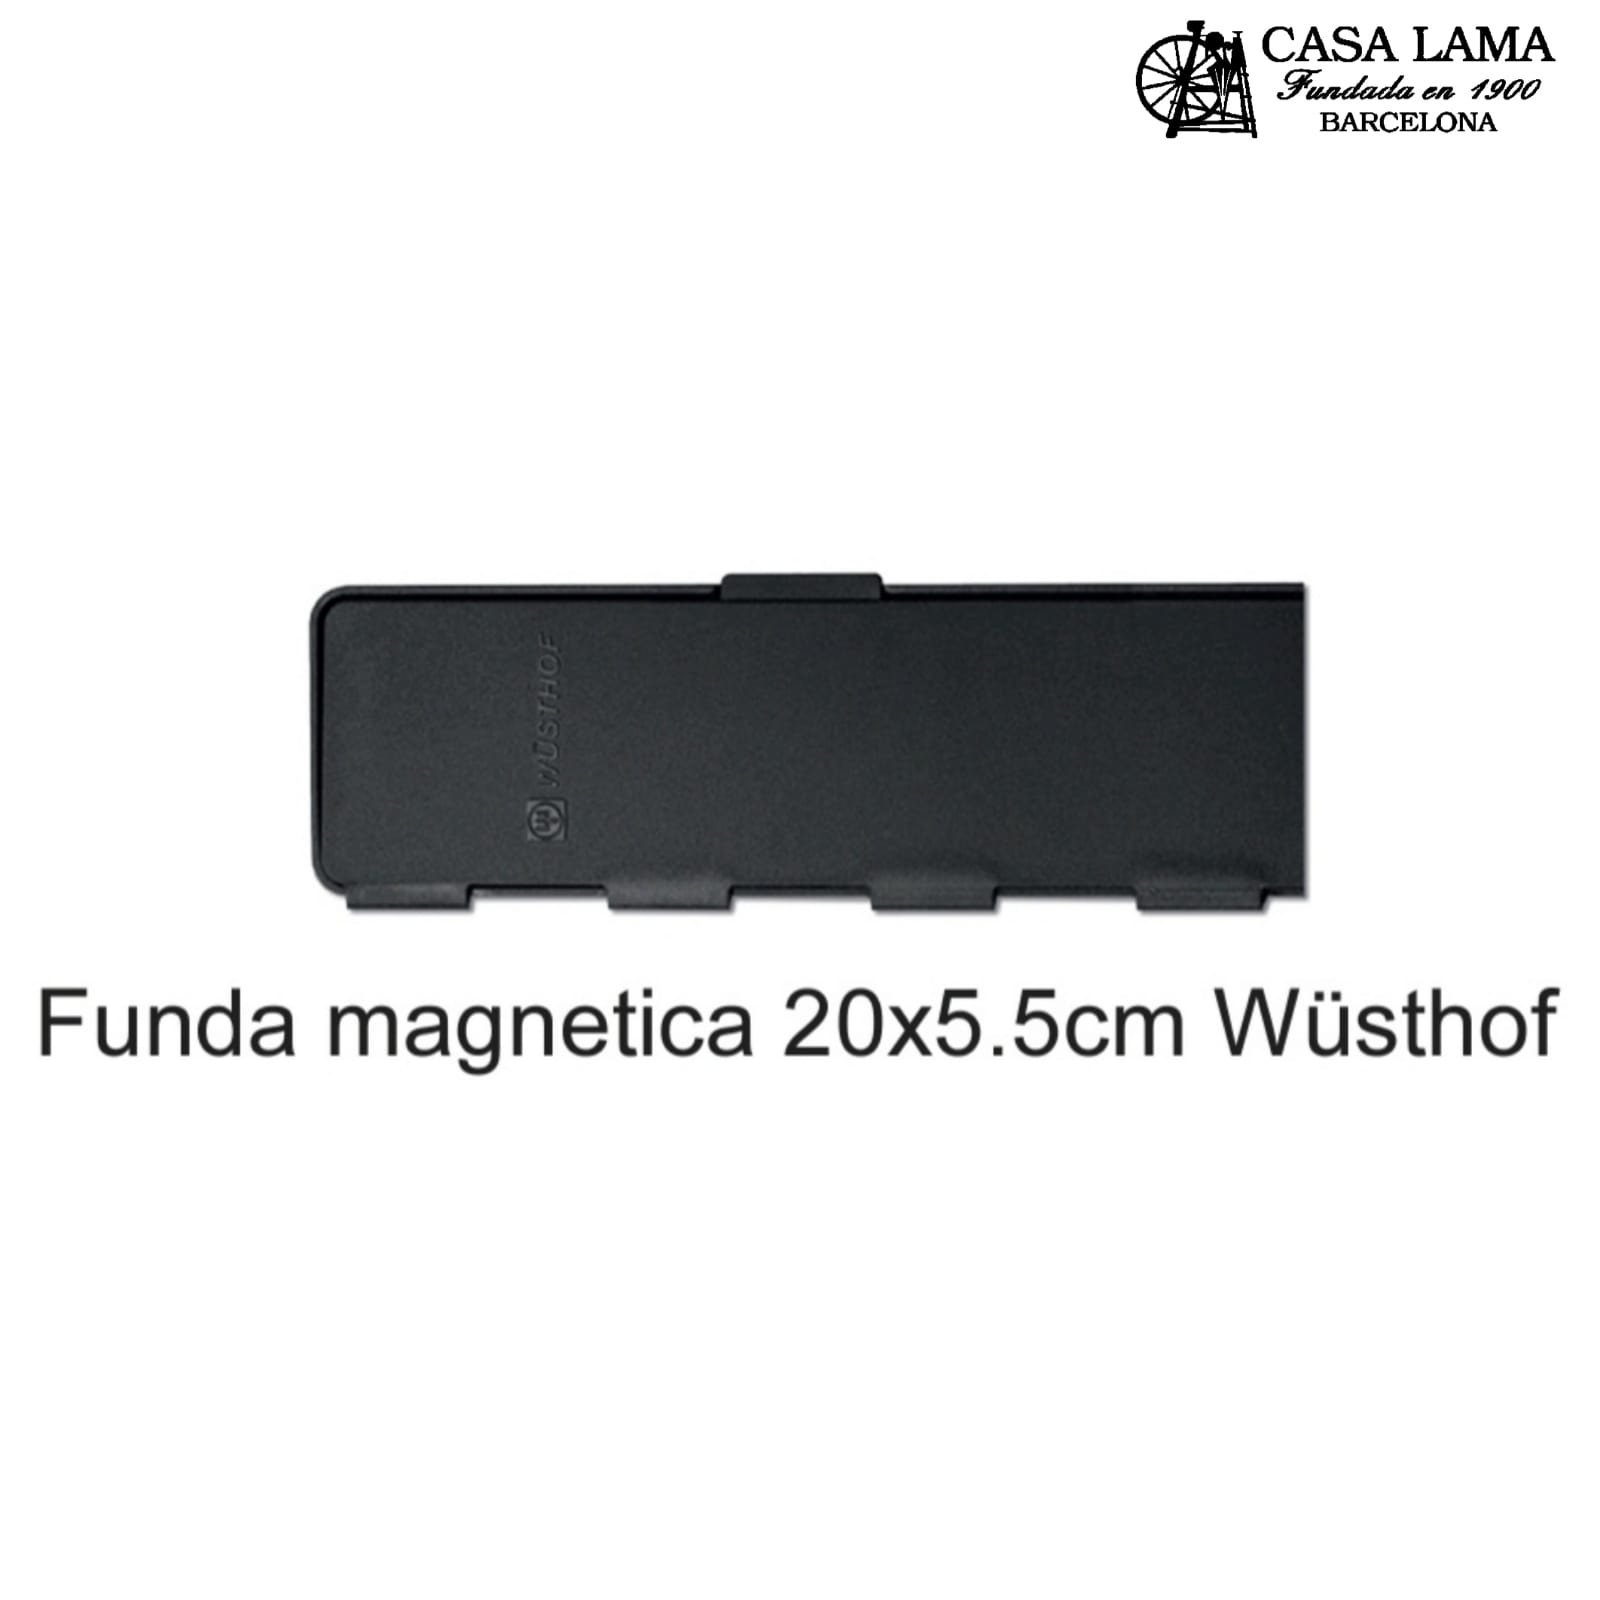 Funda magnética para cuchillos Wüsthof 20x5,5cm